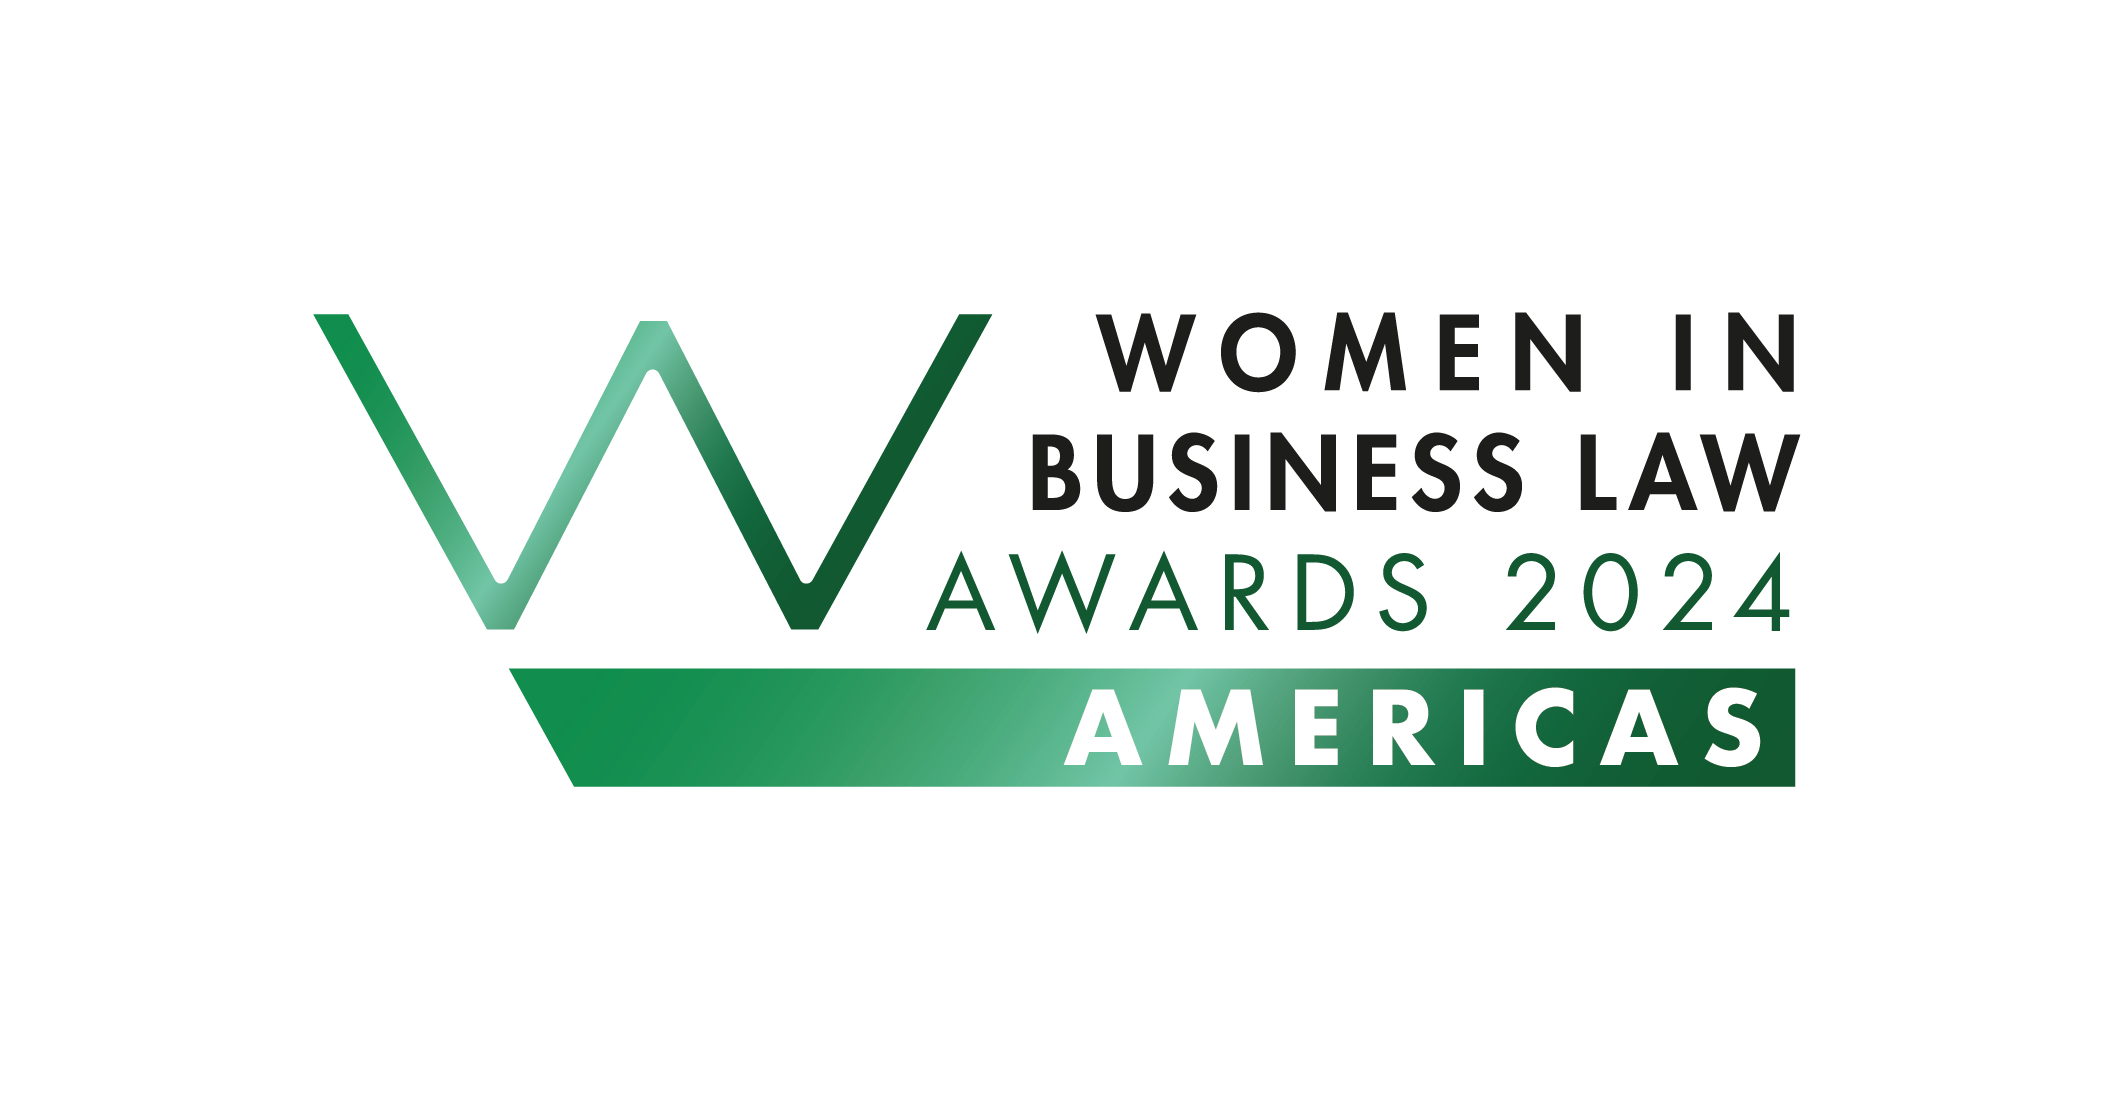 Women in Business Law Awards - Americas